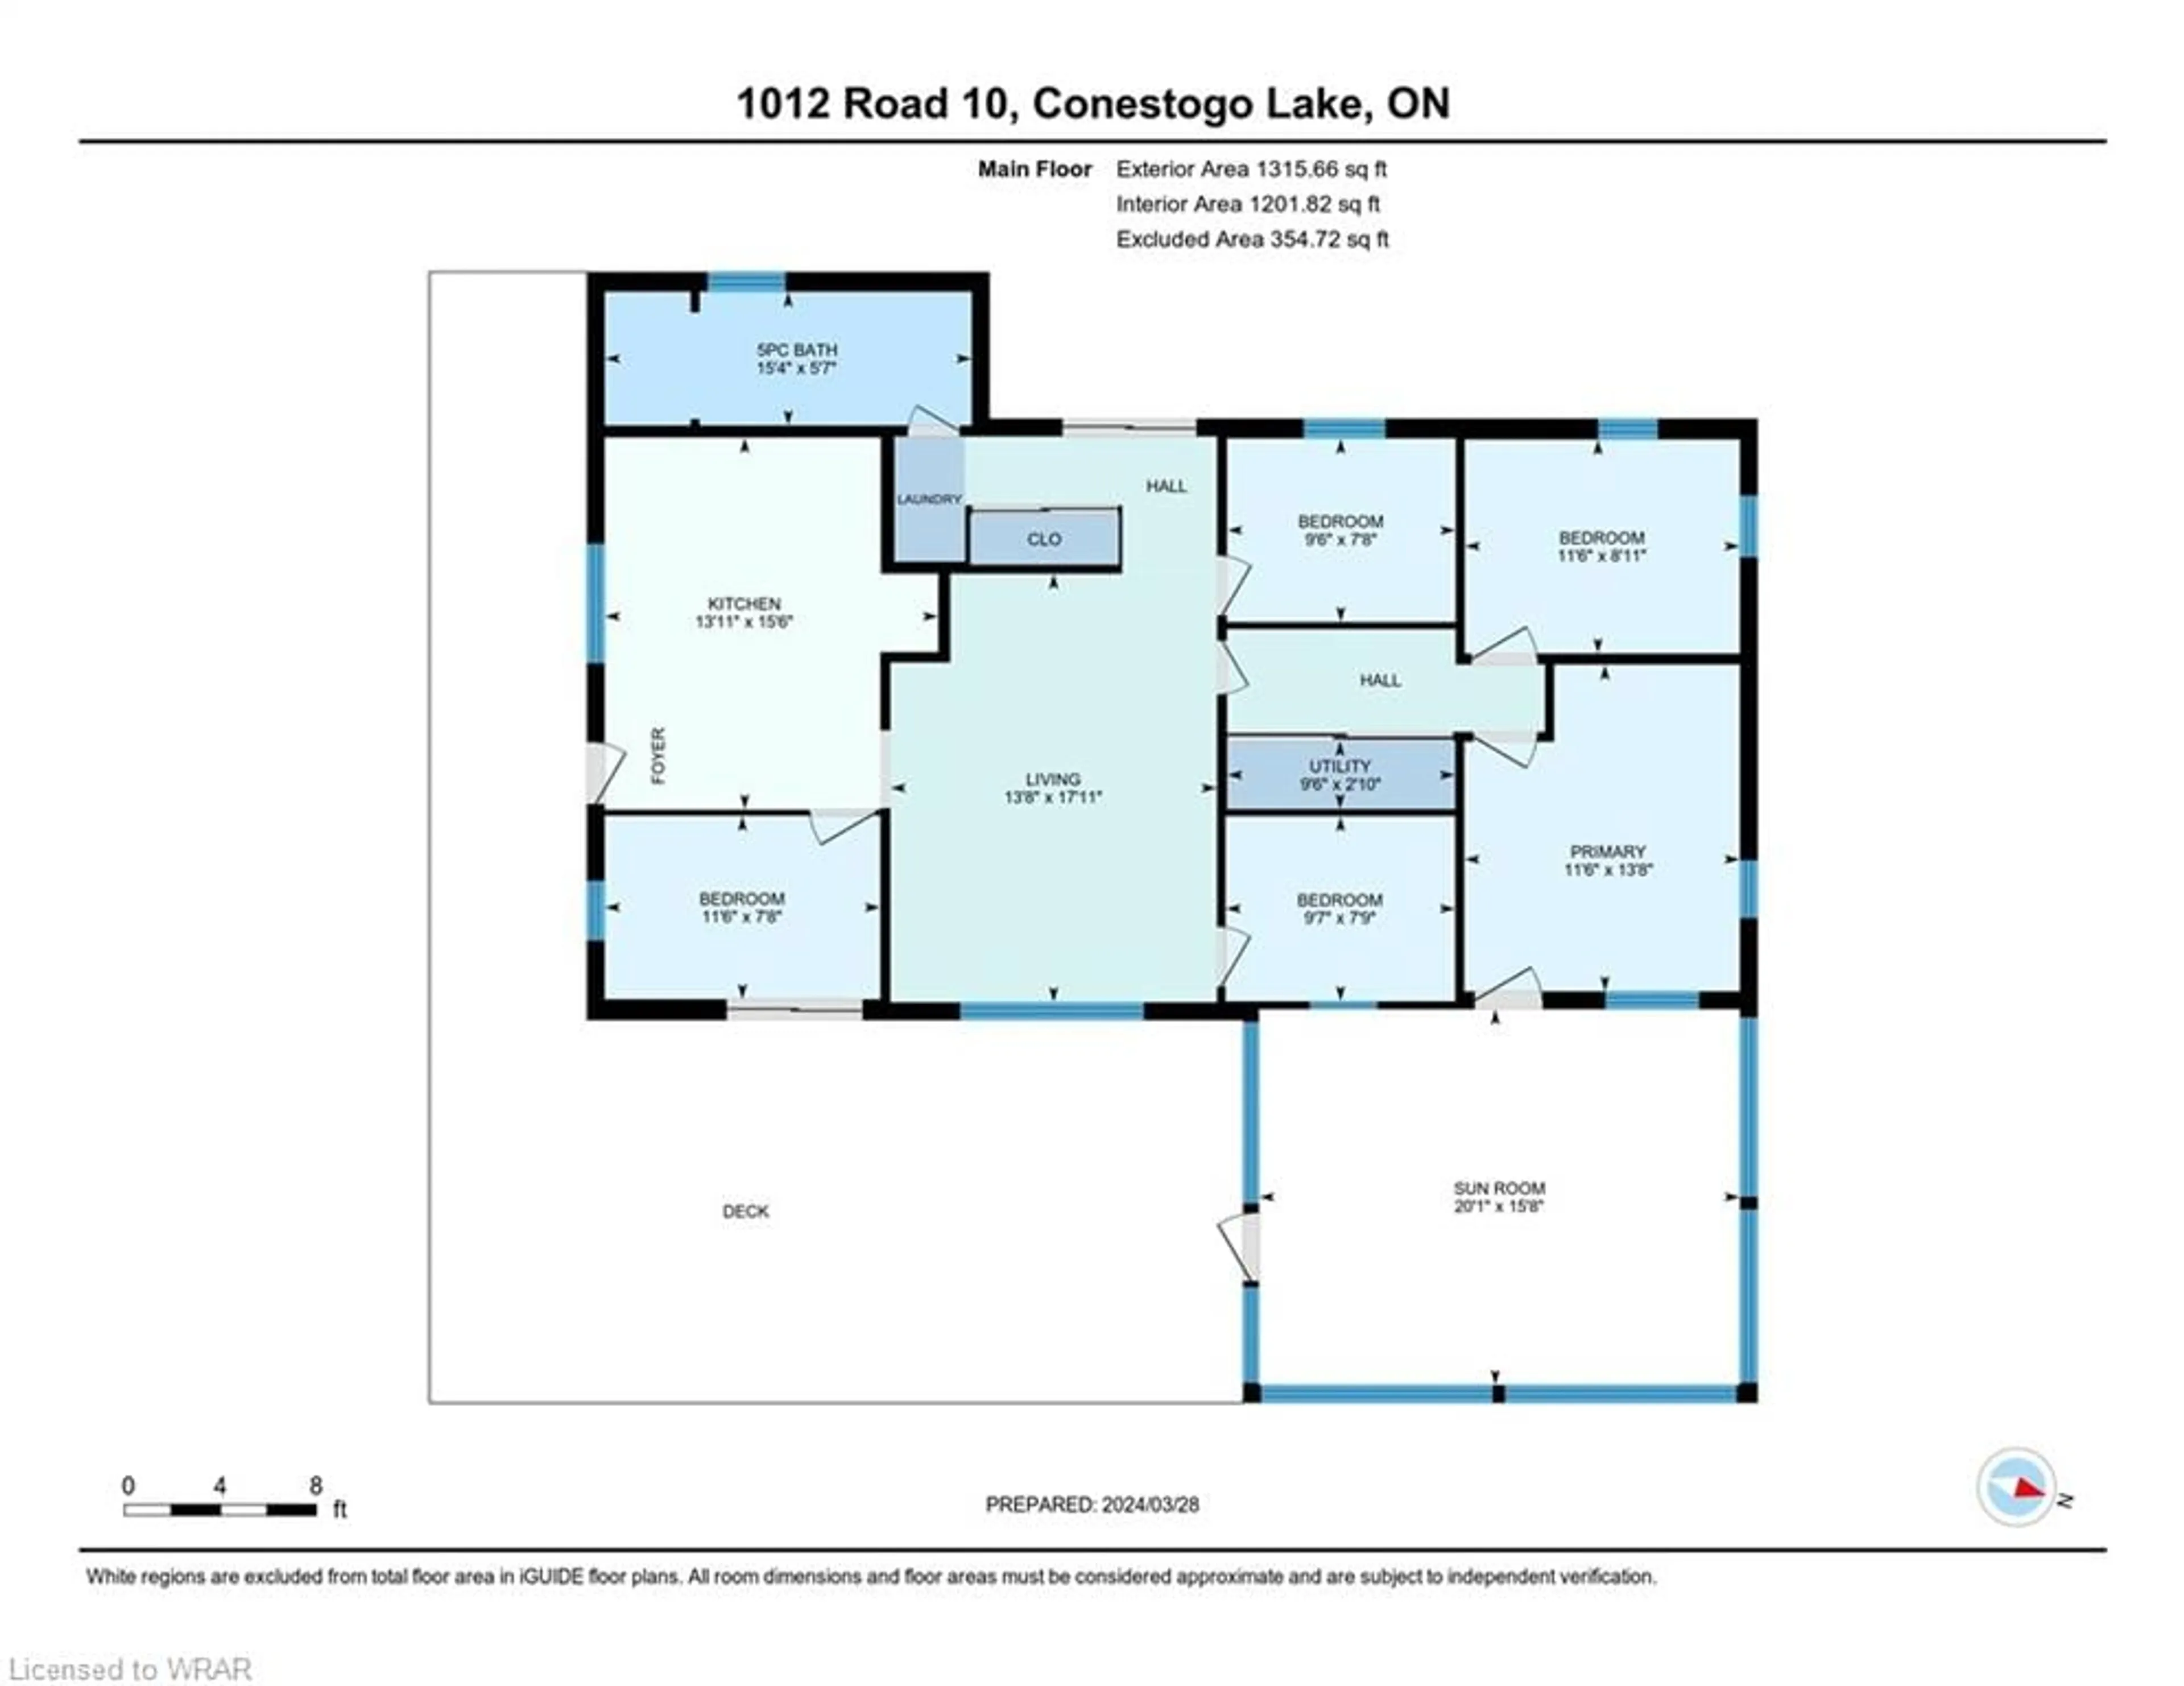 Floor plan for 1012 Road 10 Rd, Conestogo Lake Ontario N0G 1P0